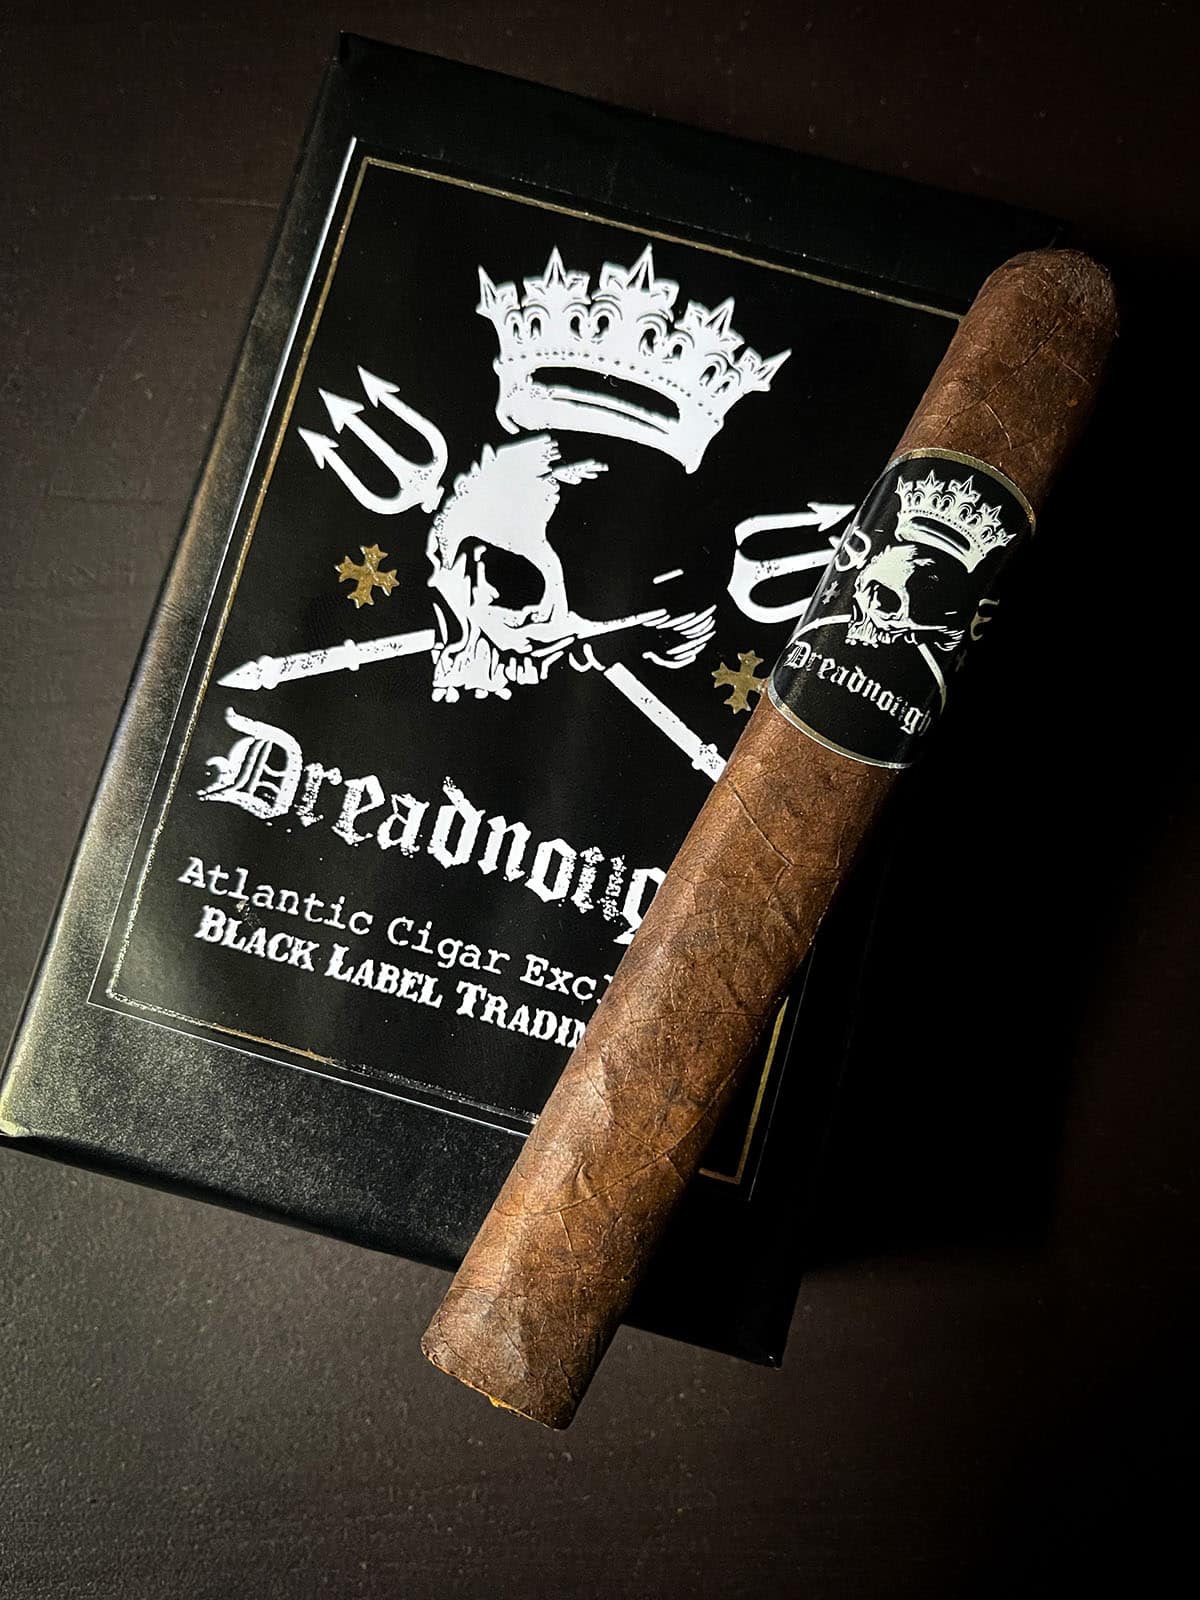 black-label-trading-company’s-dreadnought-headed-to-atlantic-cigar